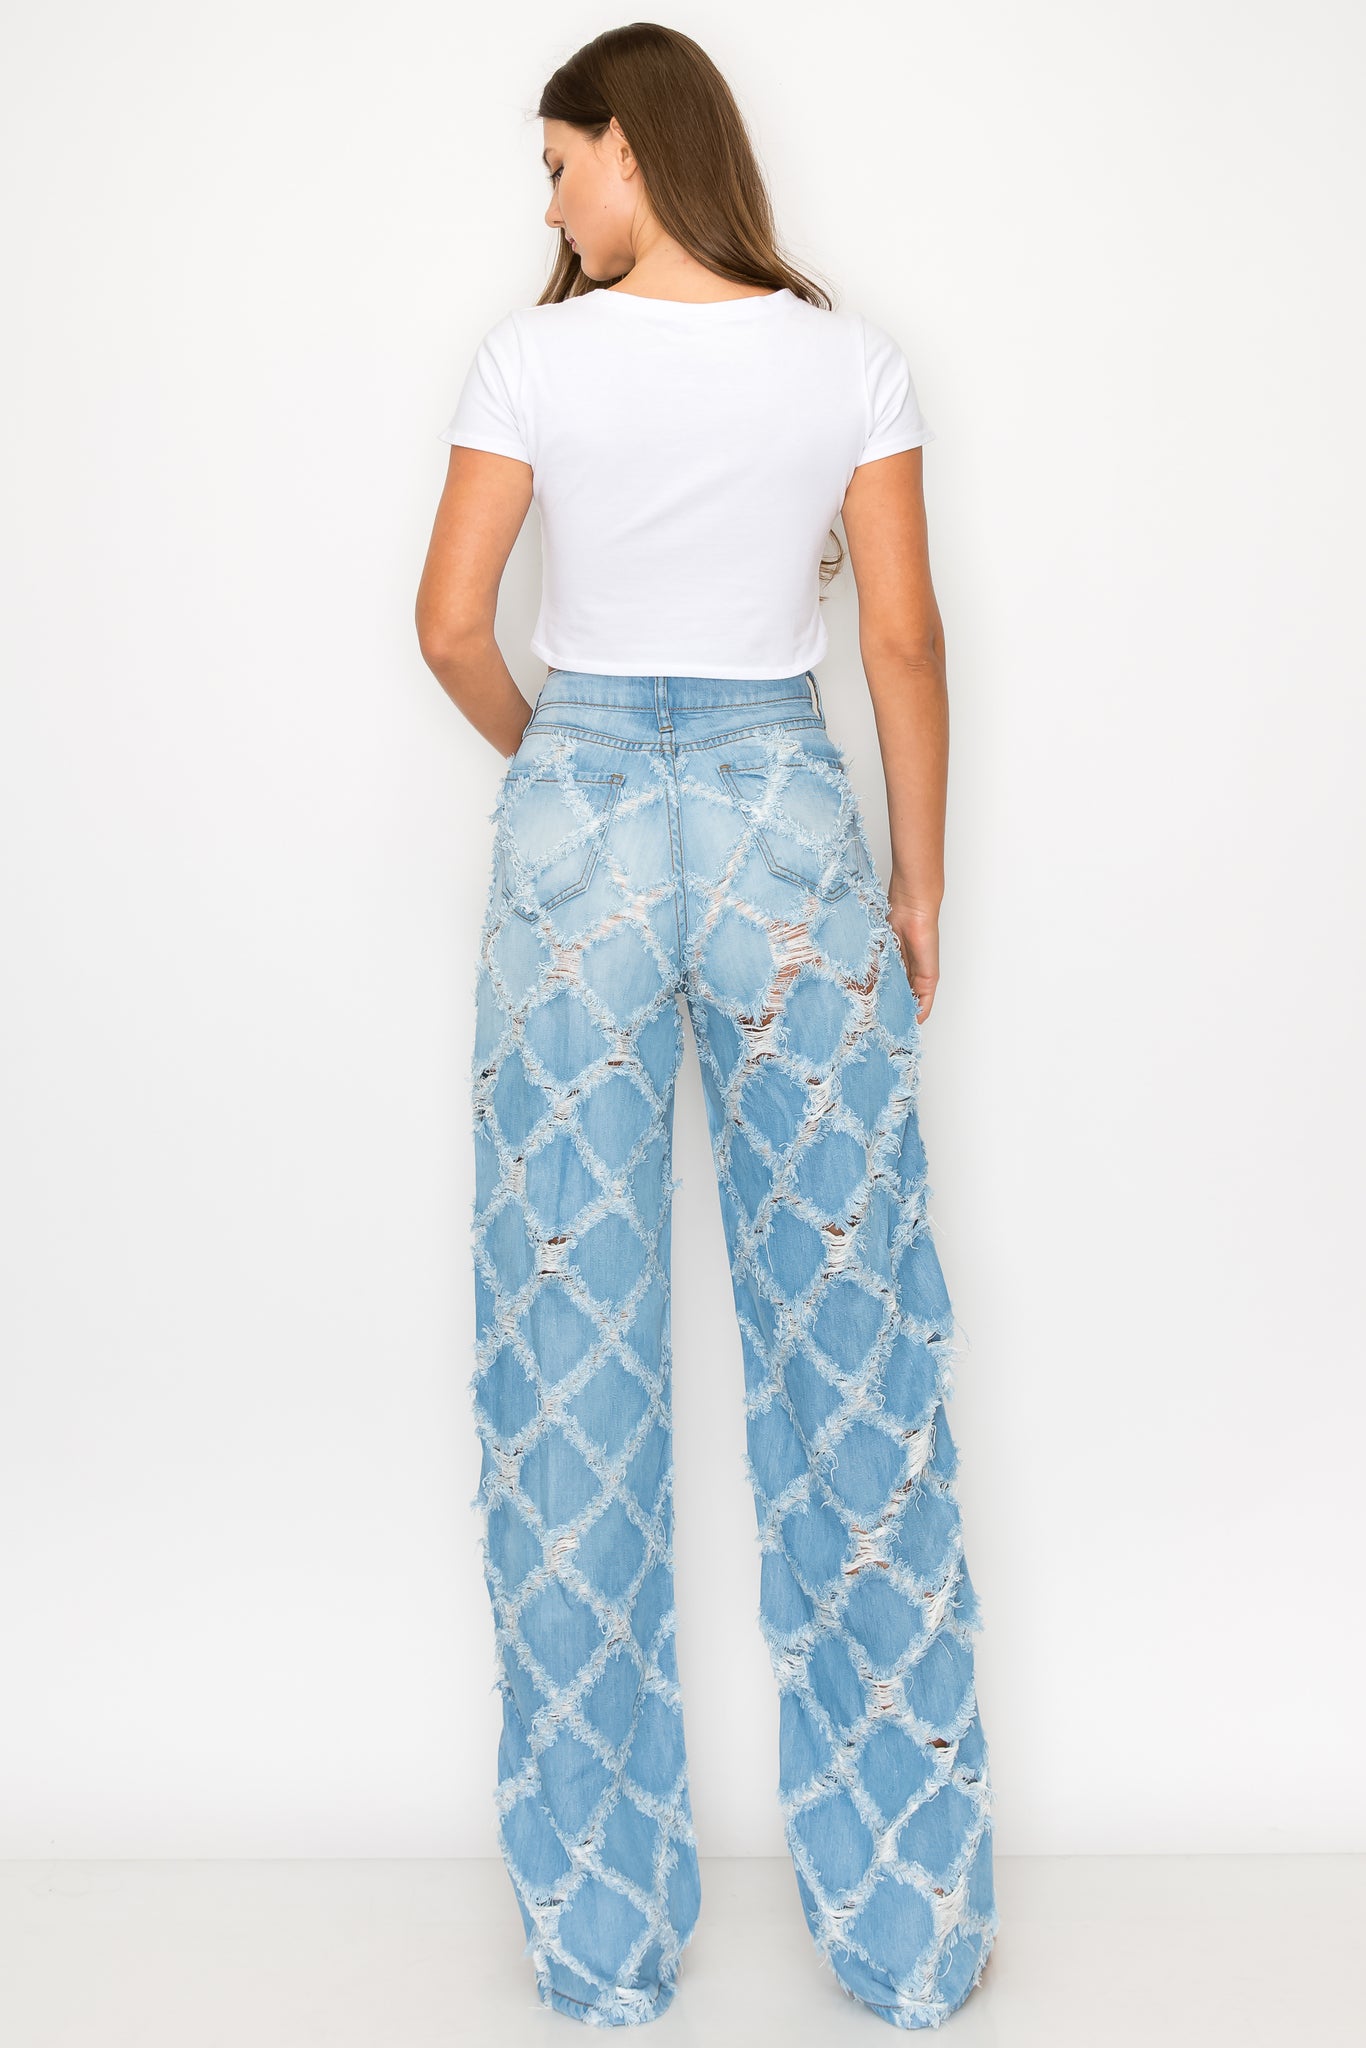 40566 Women's High Rise Loose Fit Jeans w/ Crisscross Frayed Denim Pants